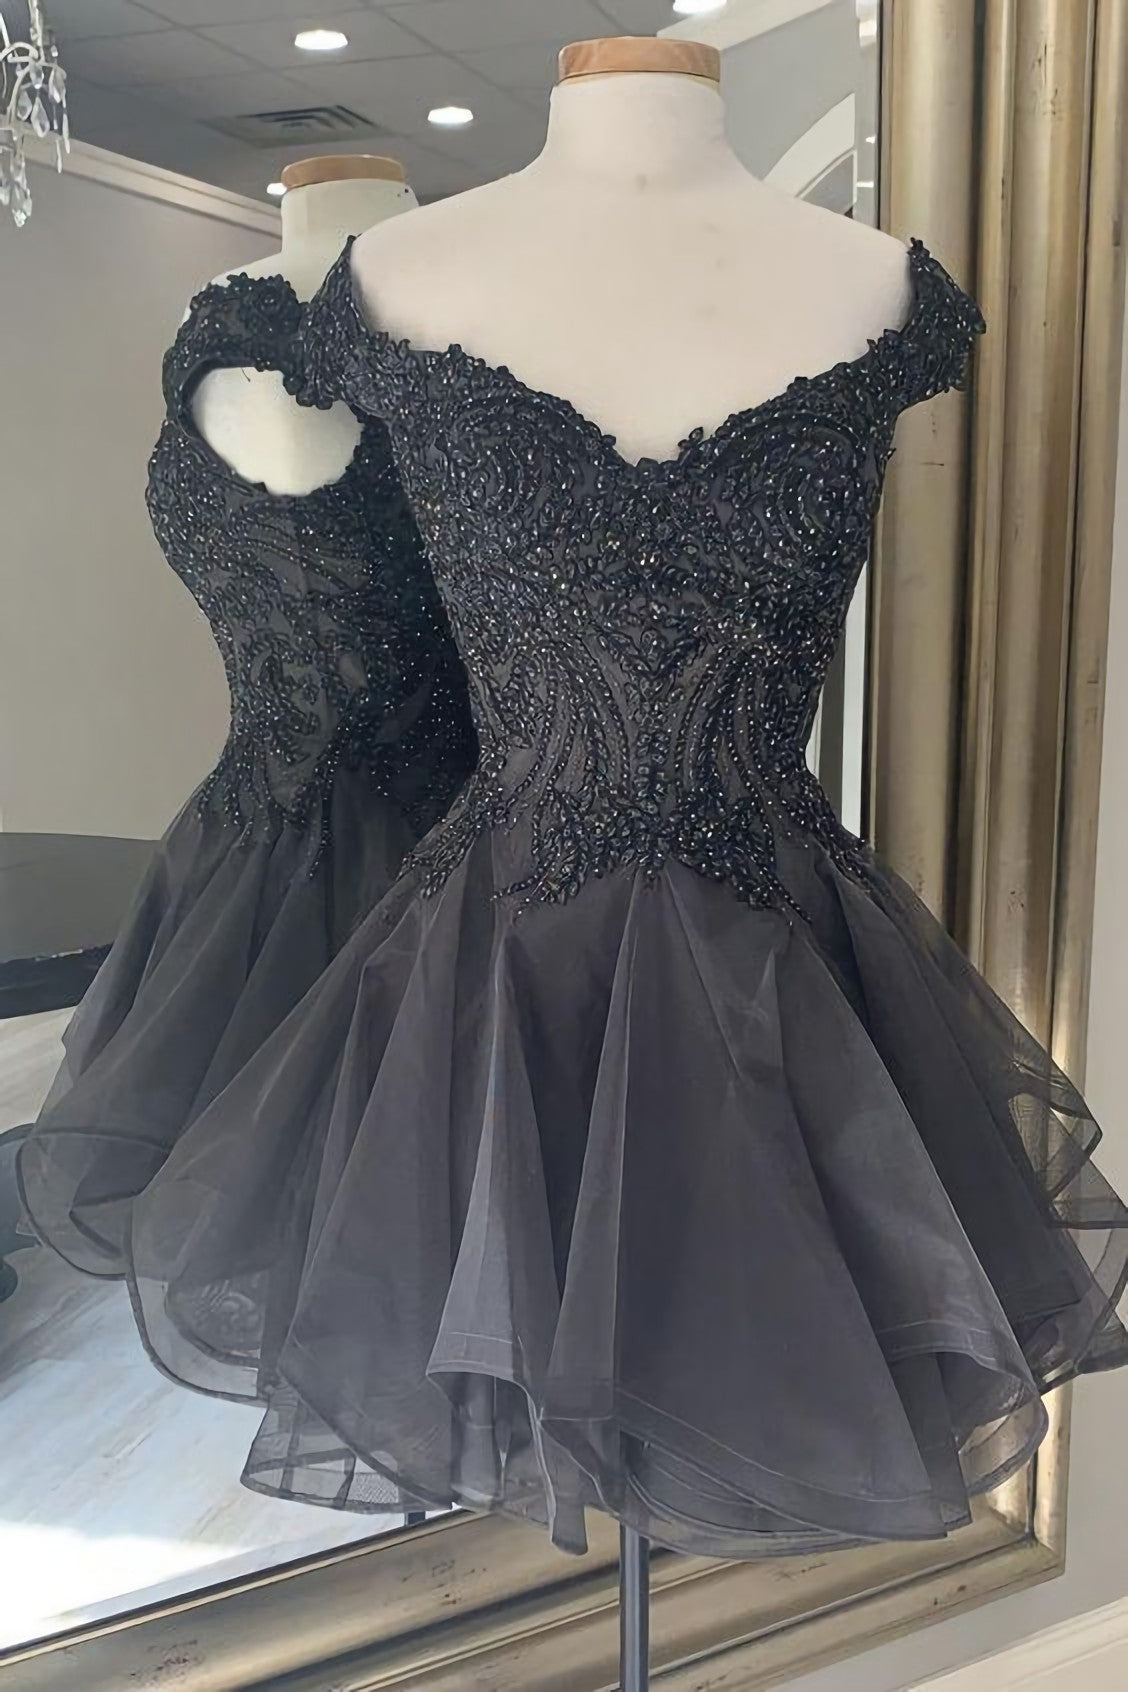 Prom Dresses Silk, Off The Shoulder Black Short Party Dress, Homecoming Dress